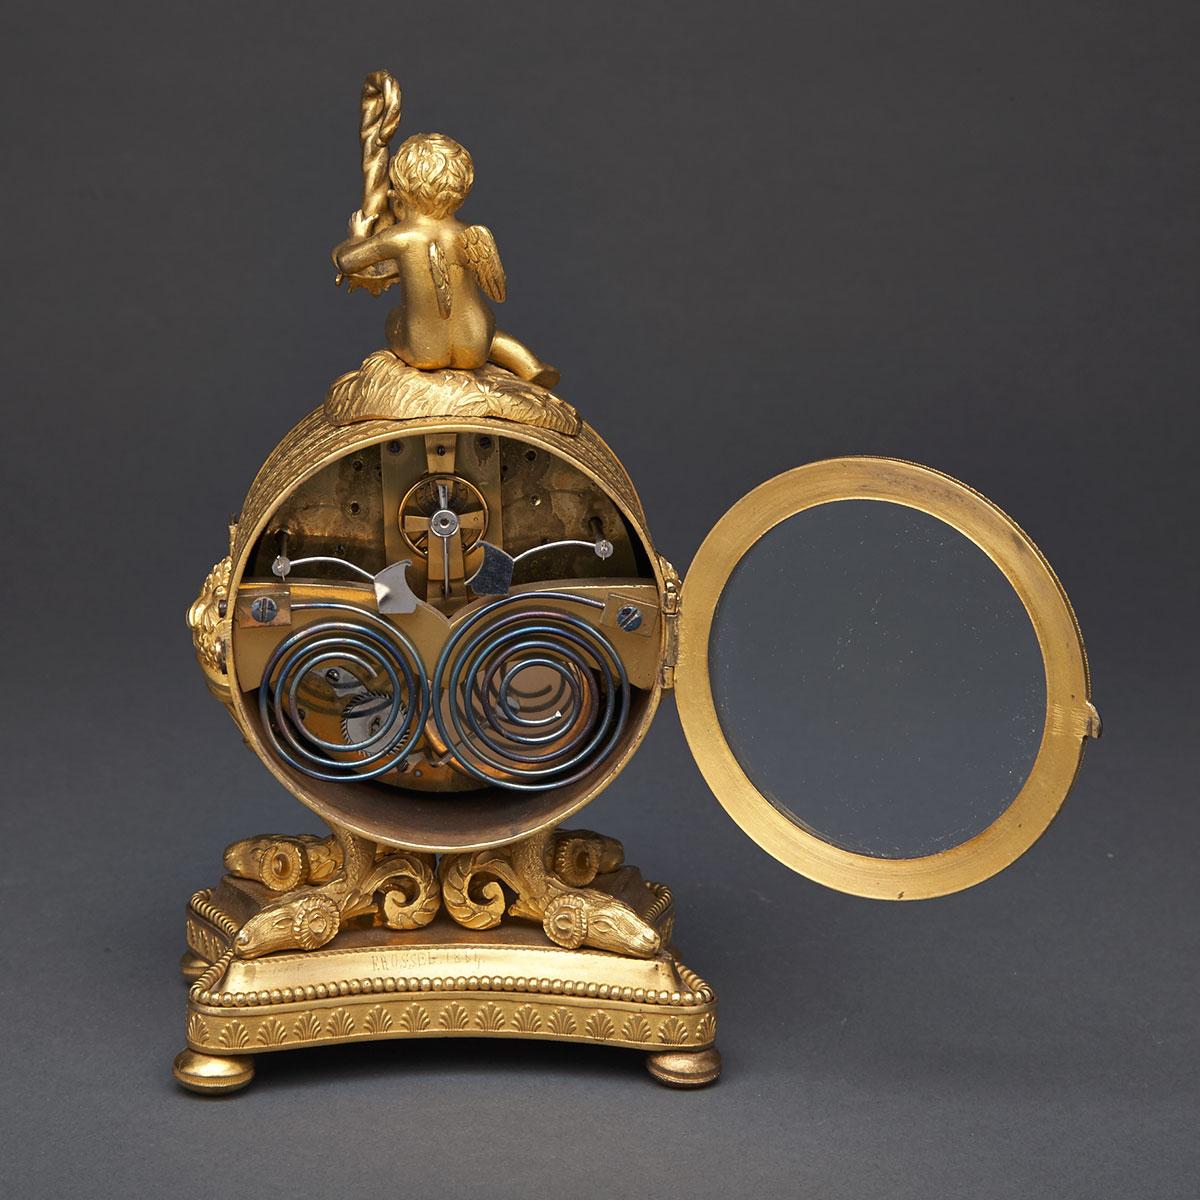 Austrian Ormolu Quarter Repeating Grande Sonnerie Pendule d’Officier with Alarm, Mart: Roeck in Wein c.1800